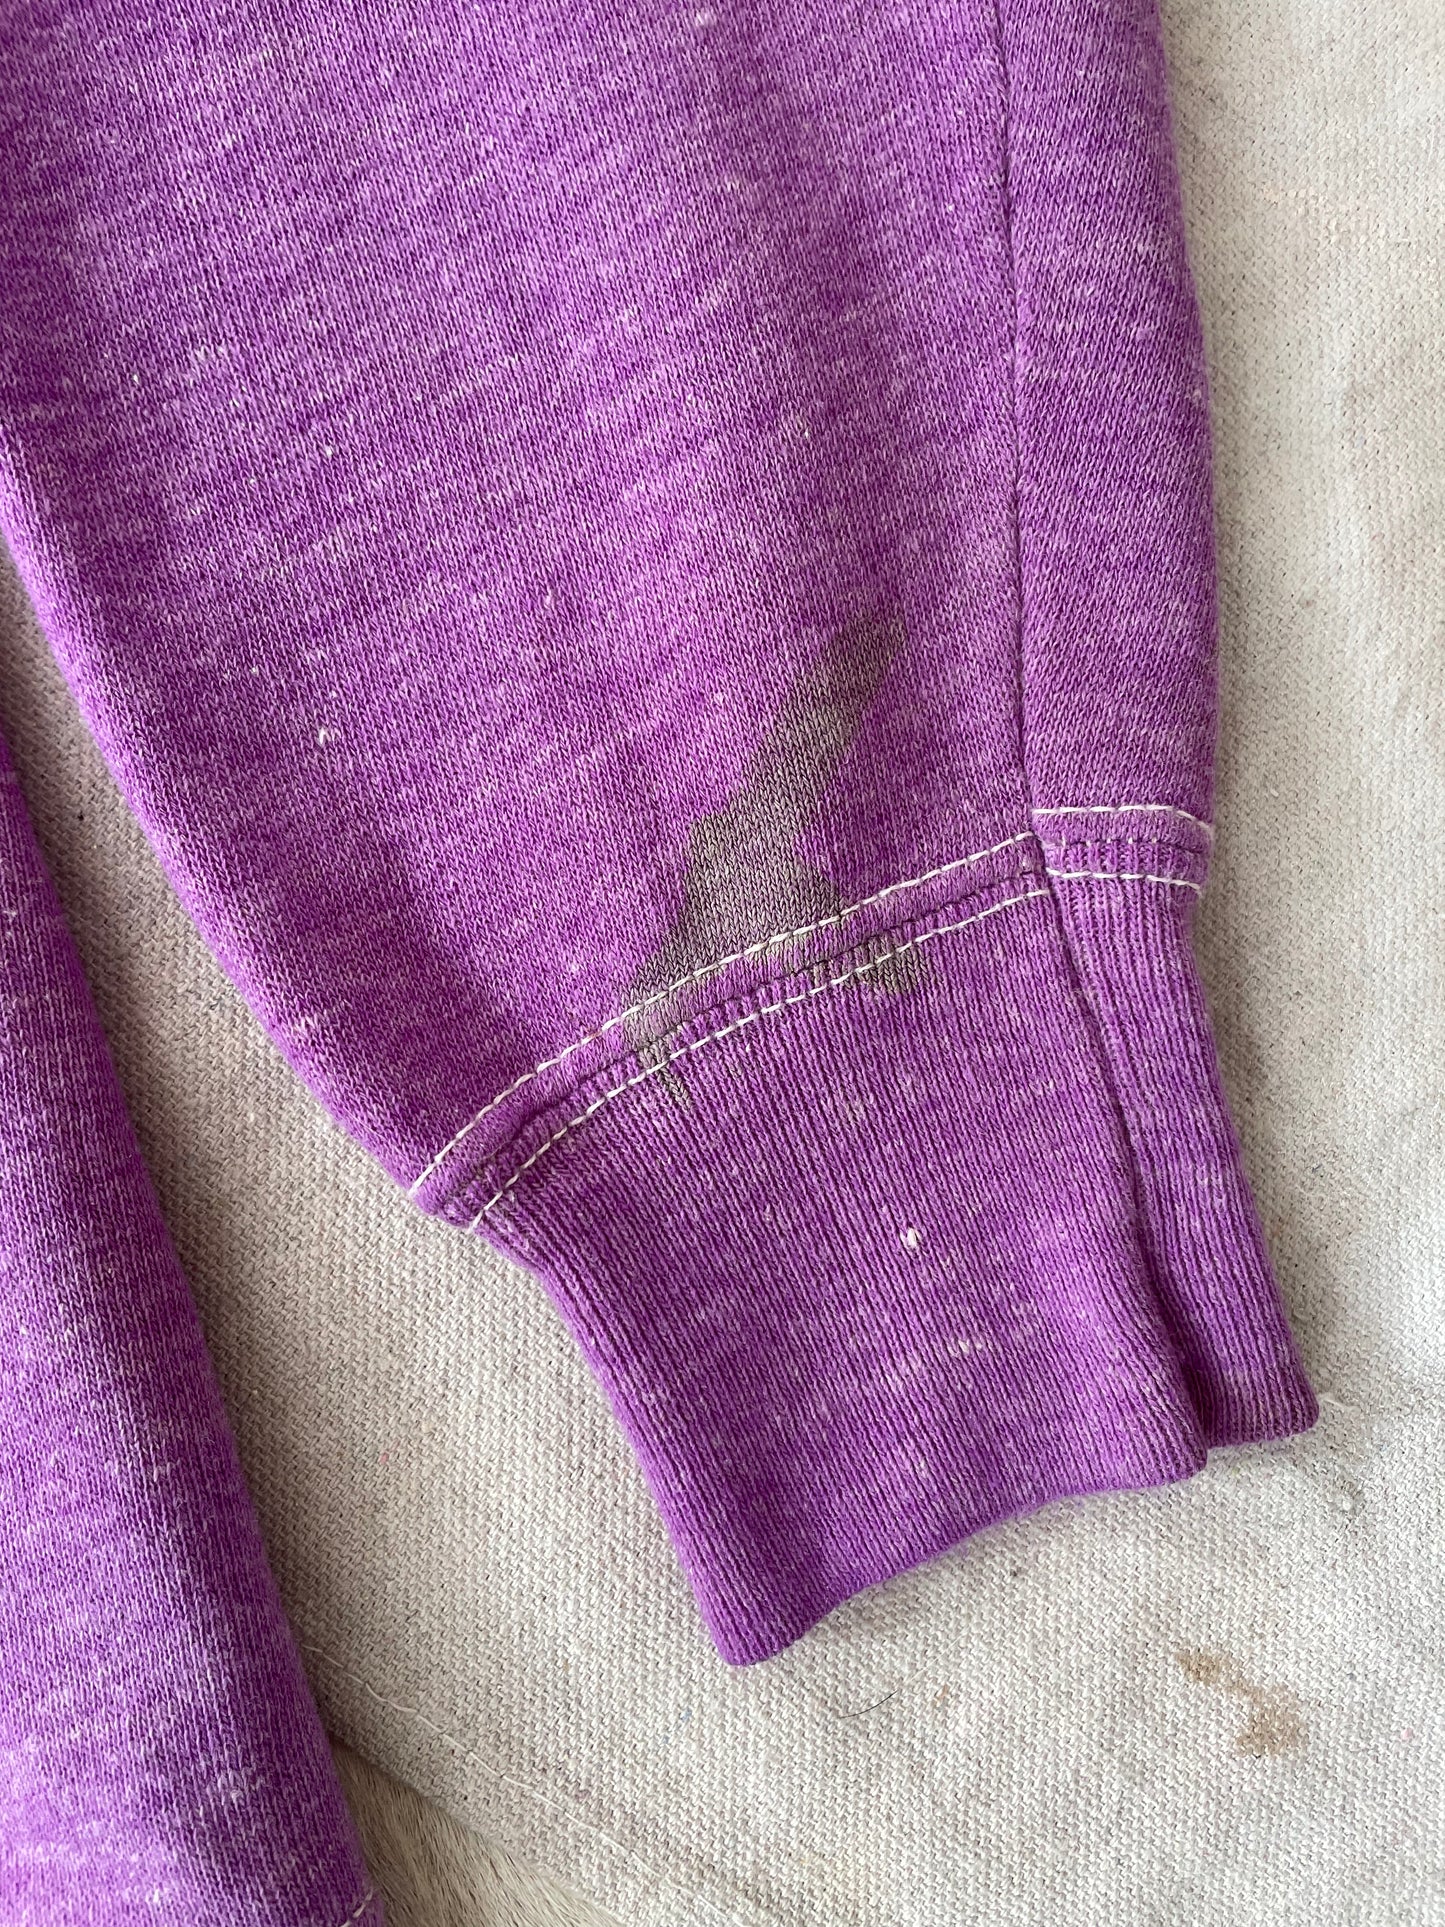 70s/80s Bright Lavender Sweatshirt